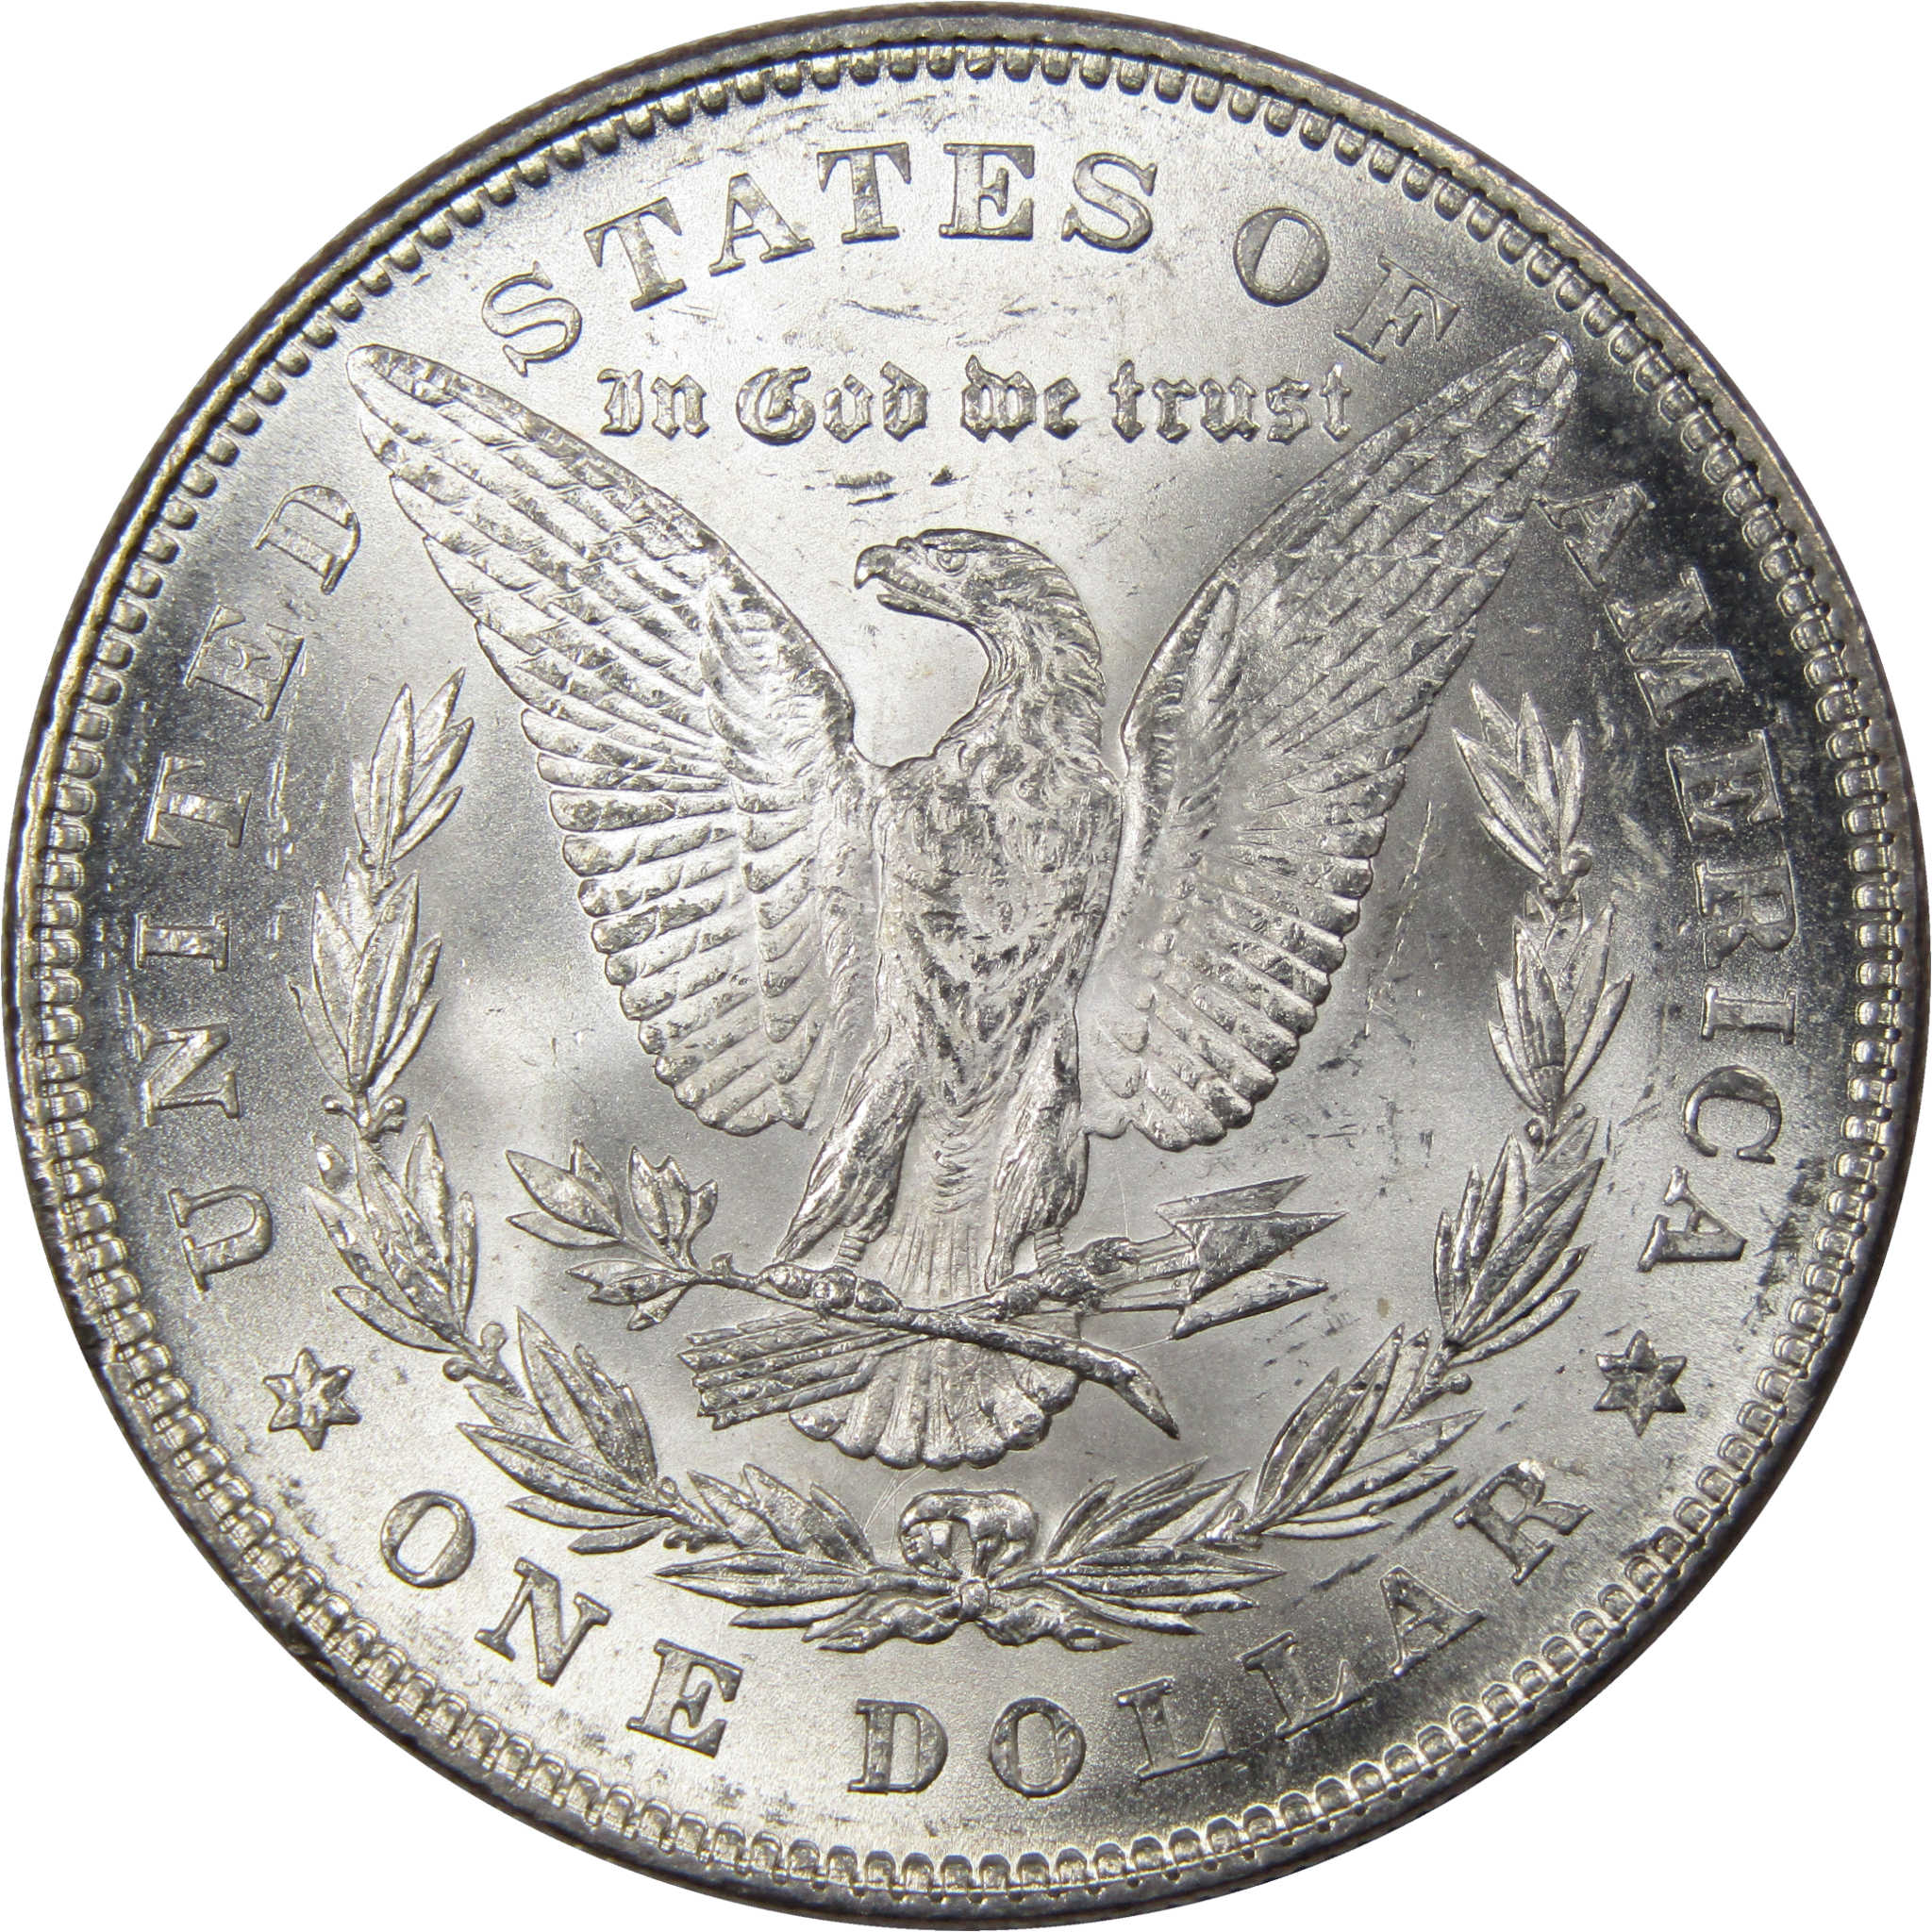 1878 7TF Rev 78 Morgan Dollar Uncirculated Mint State Silver SKU:I1652 - Morgan coin - Morgan silver dollar - Morgan silver dollar for sale - Profile Coins &amp; Collectibles